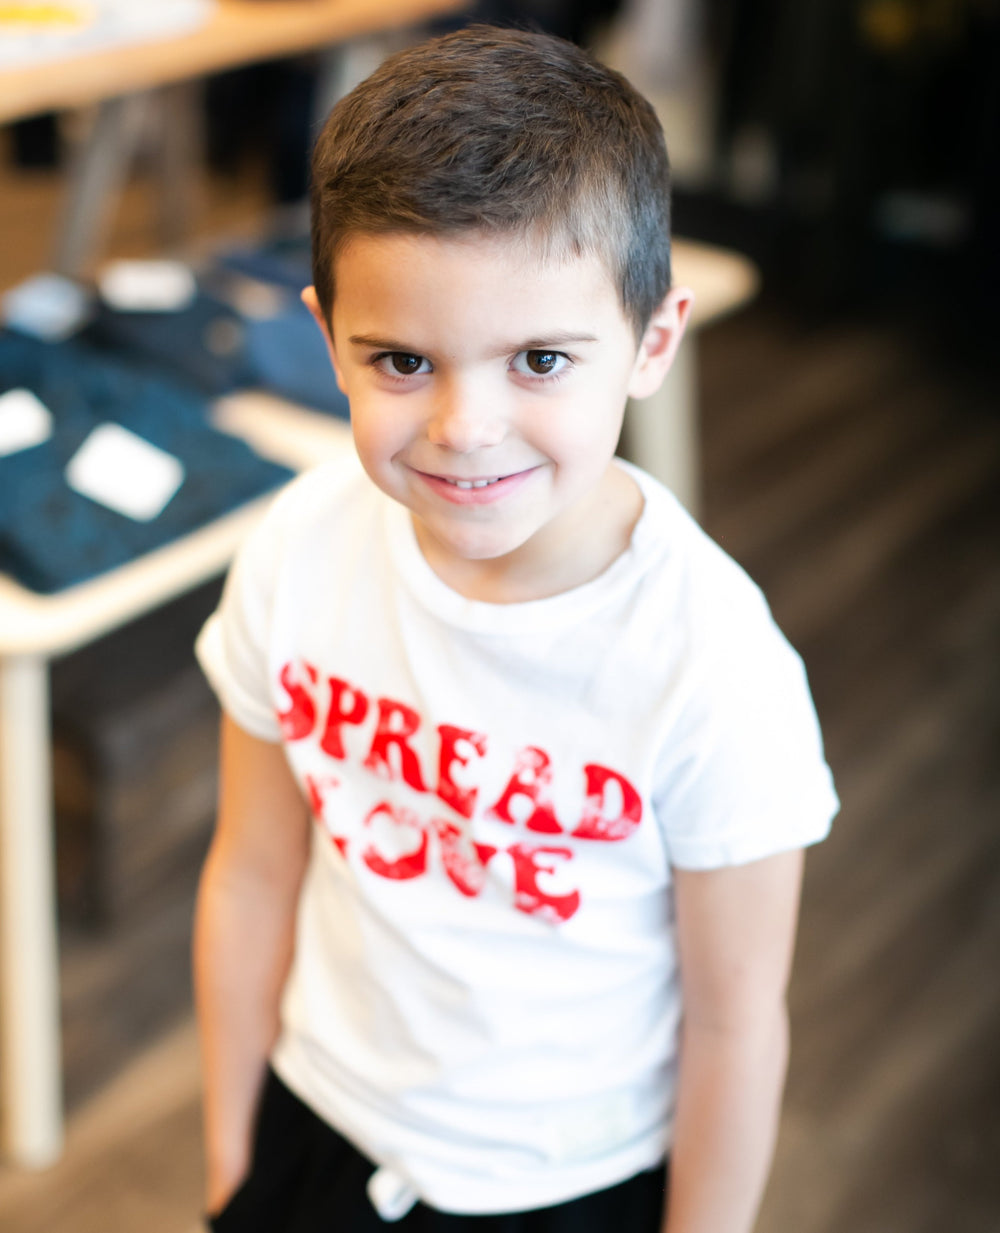 Spread Love kids shirt